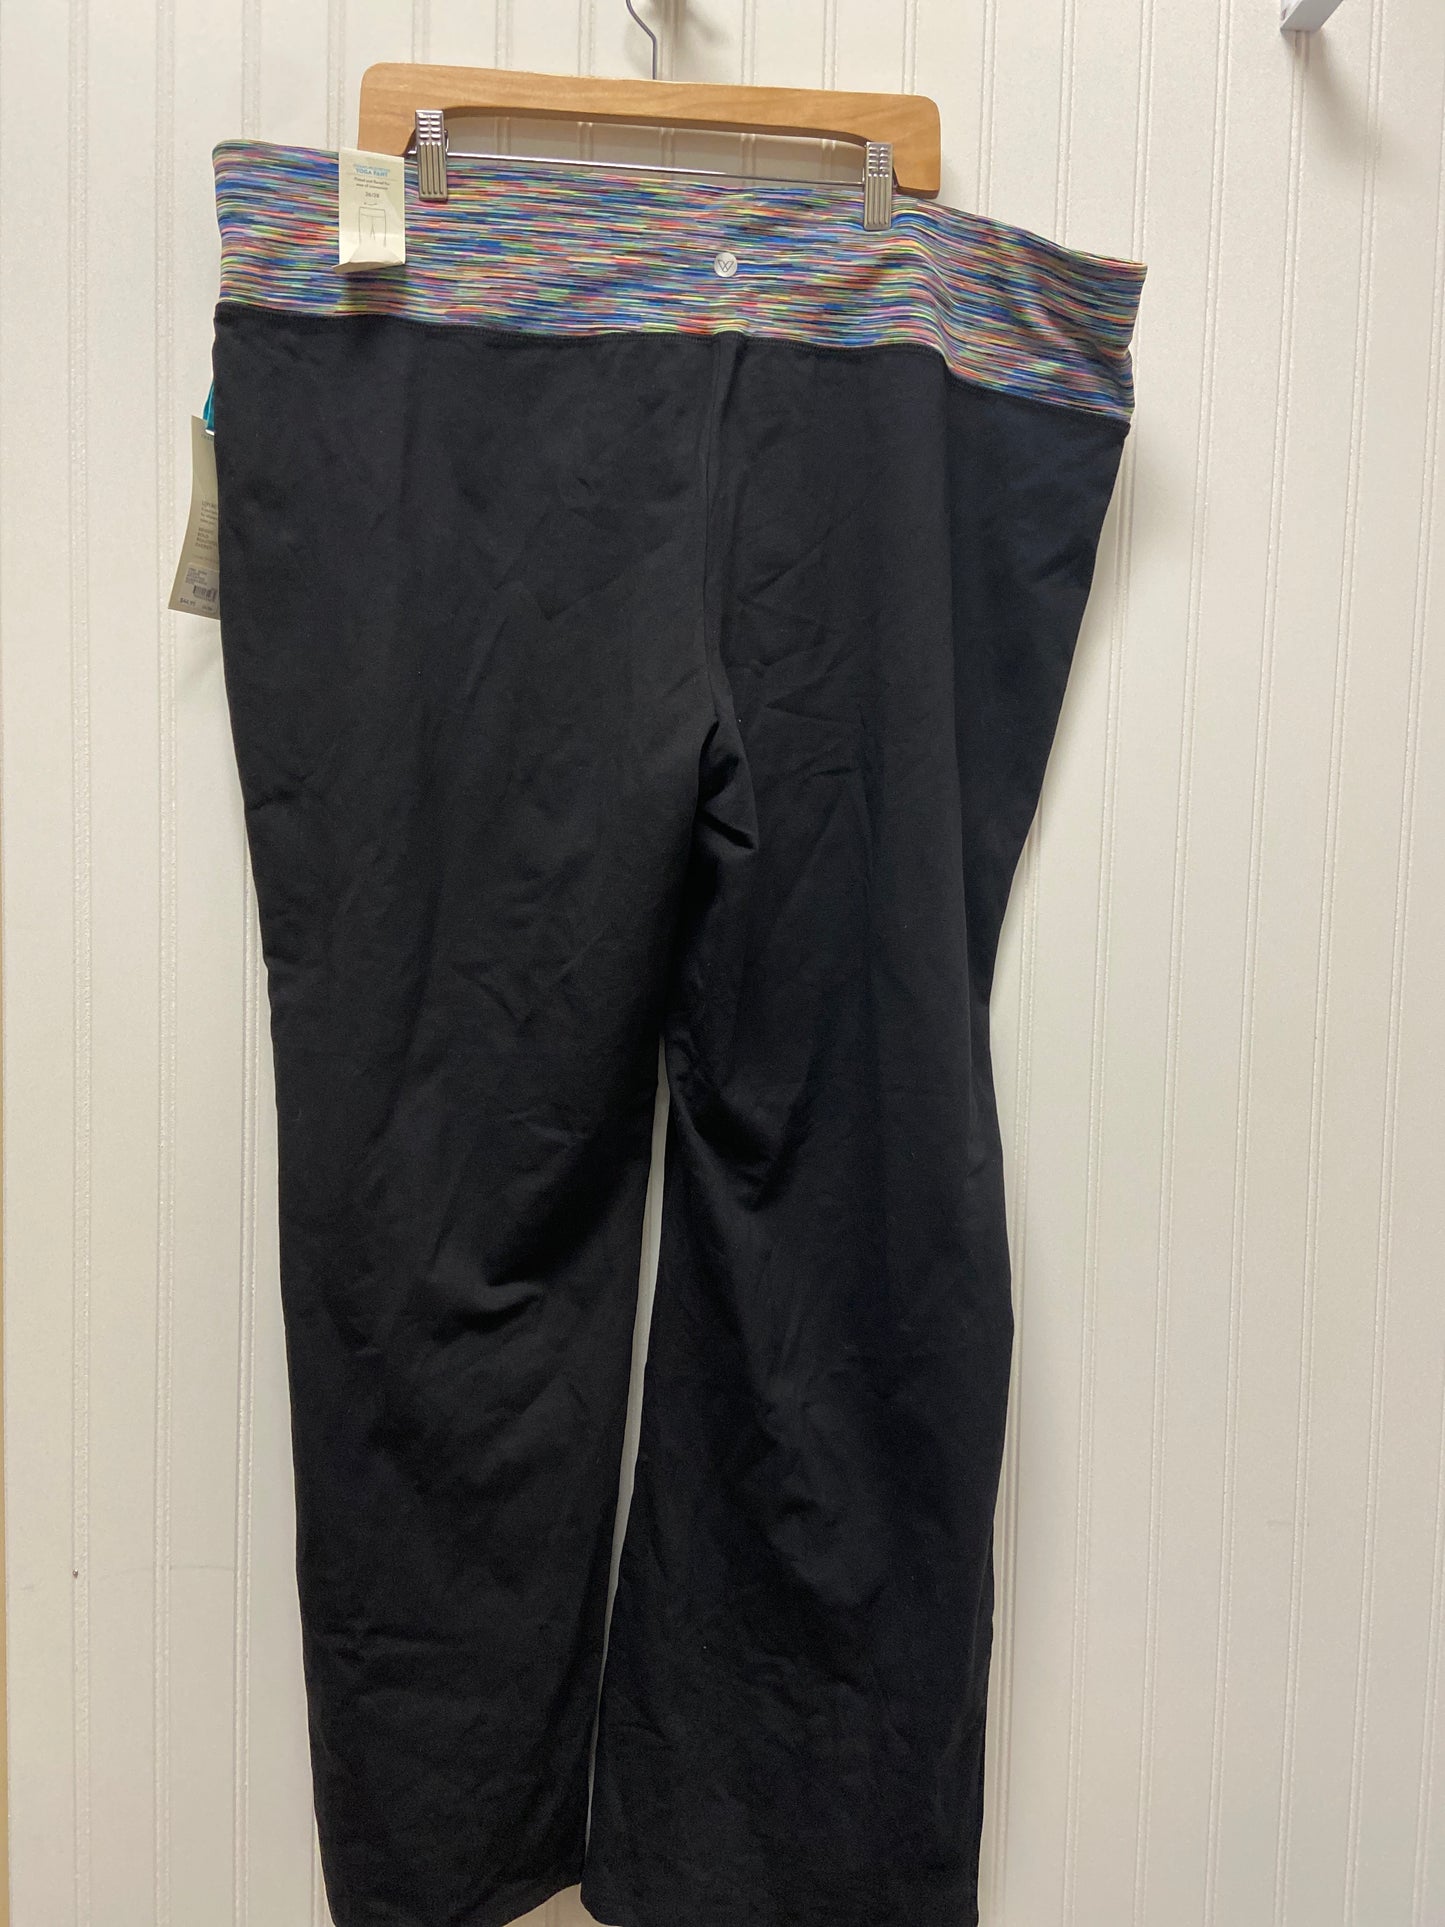 Athletic Pants 2pc By Livi Active  Size: 3x